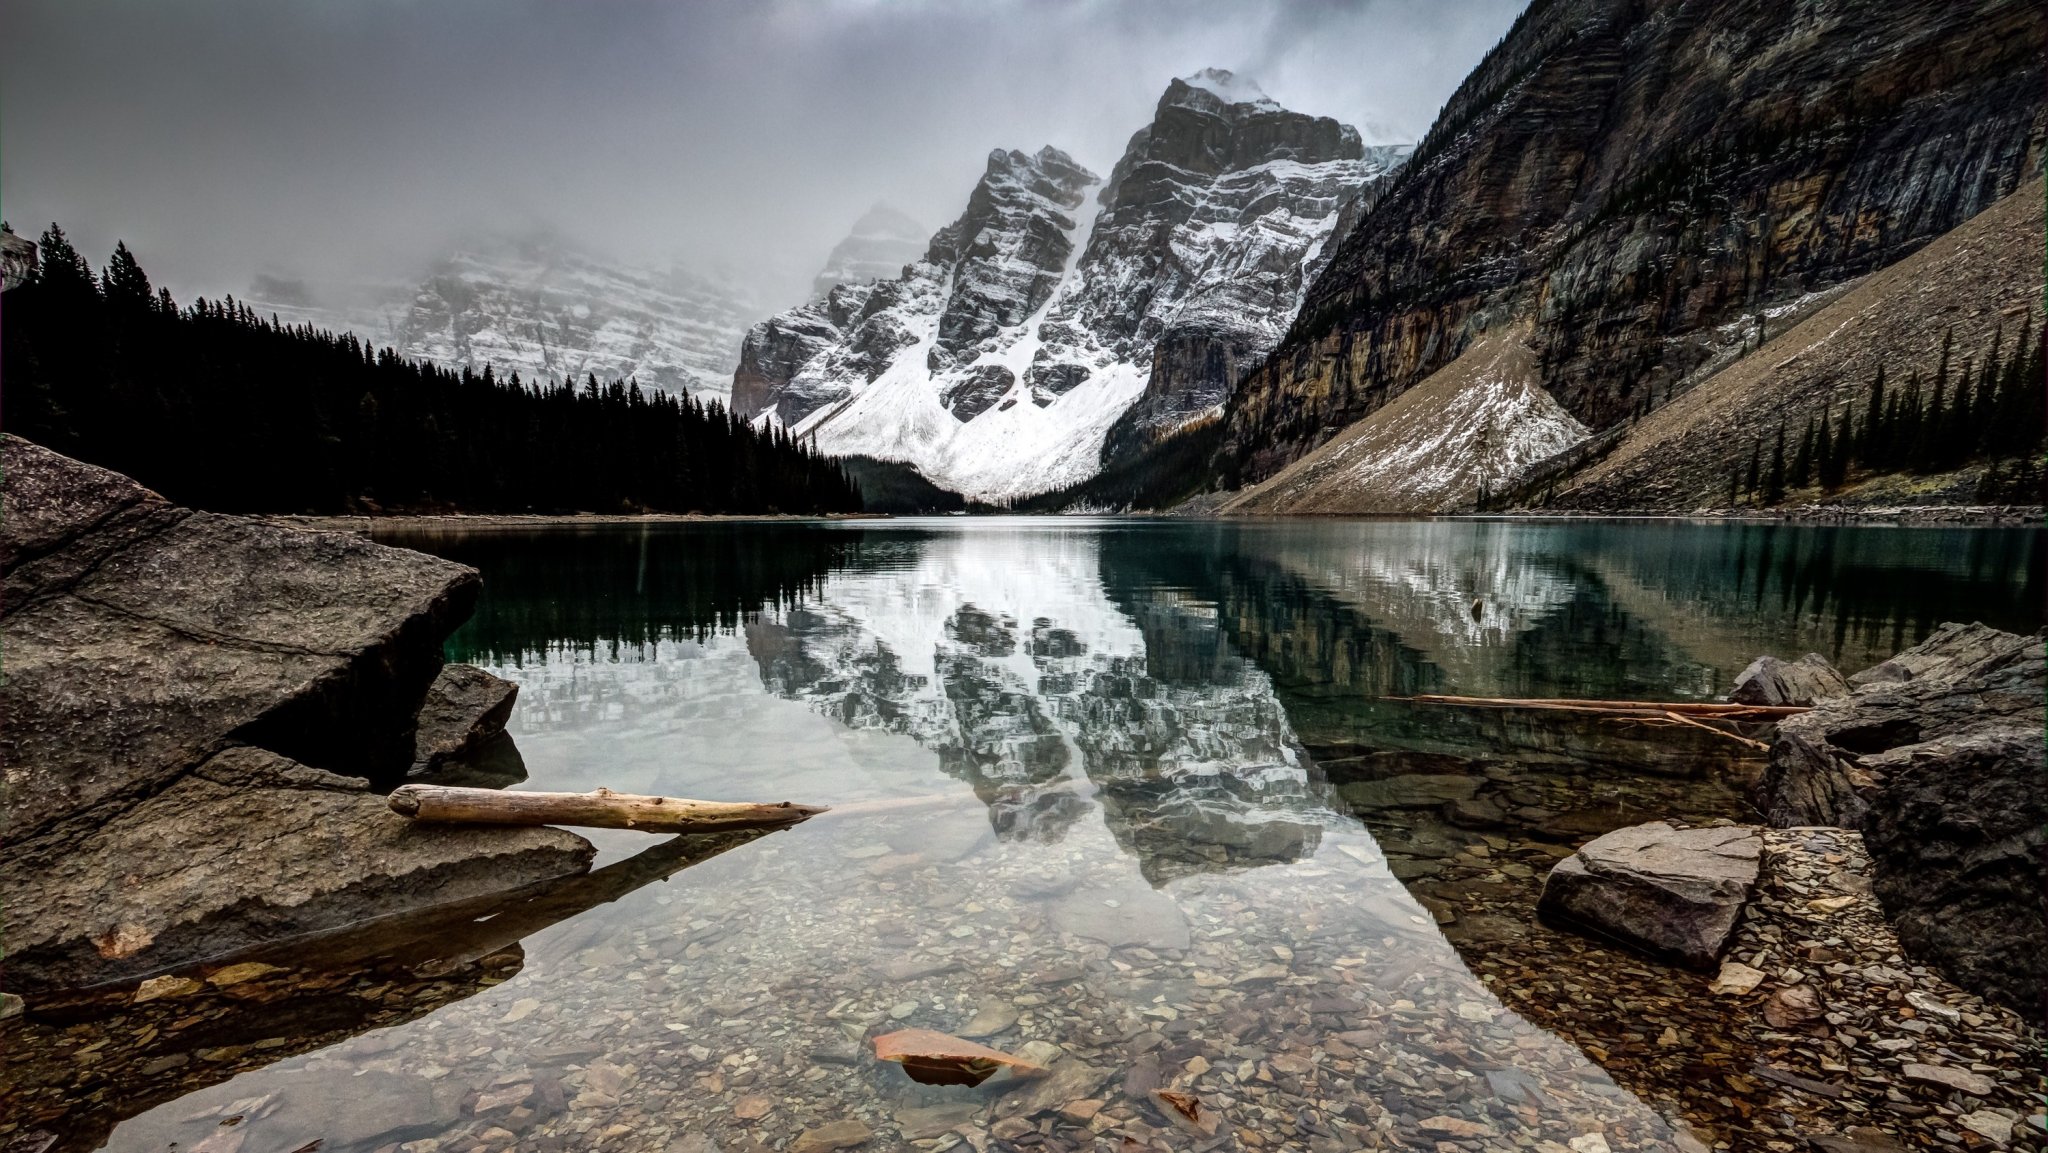 290916-Canada-morraine_lake-mountain-landscape.jpeg